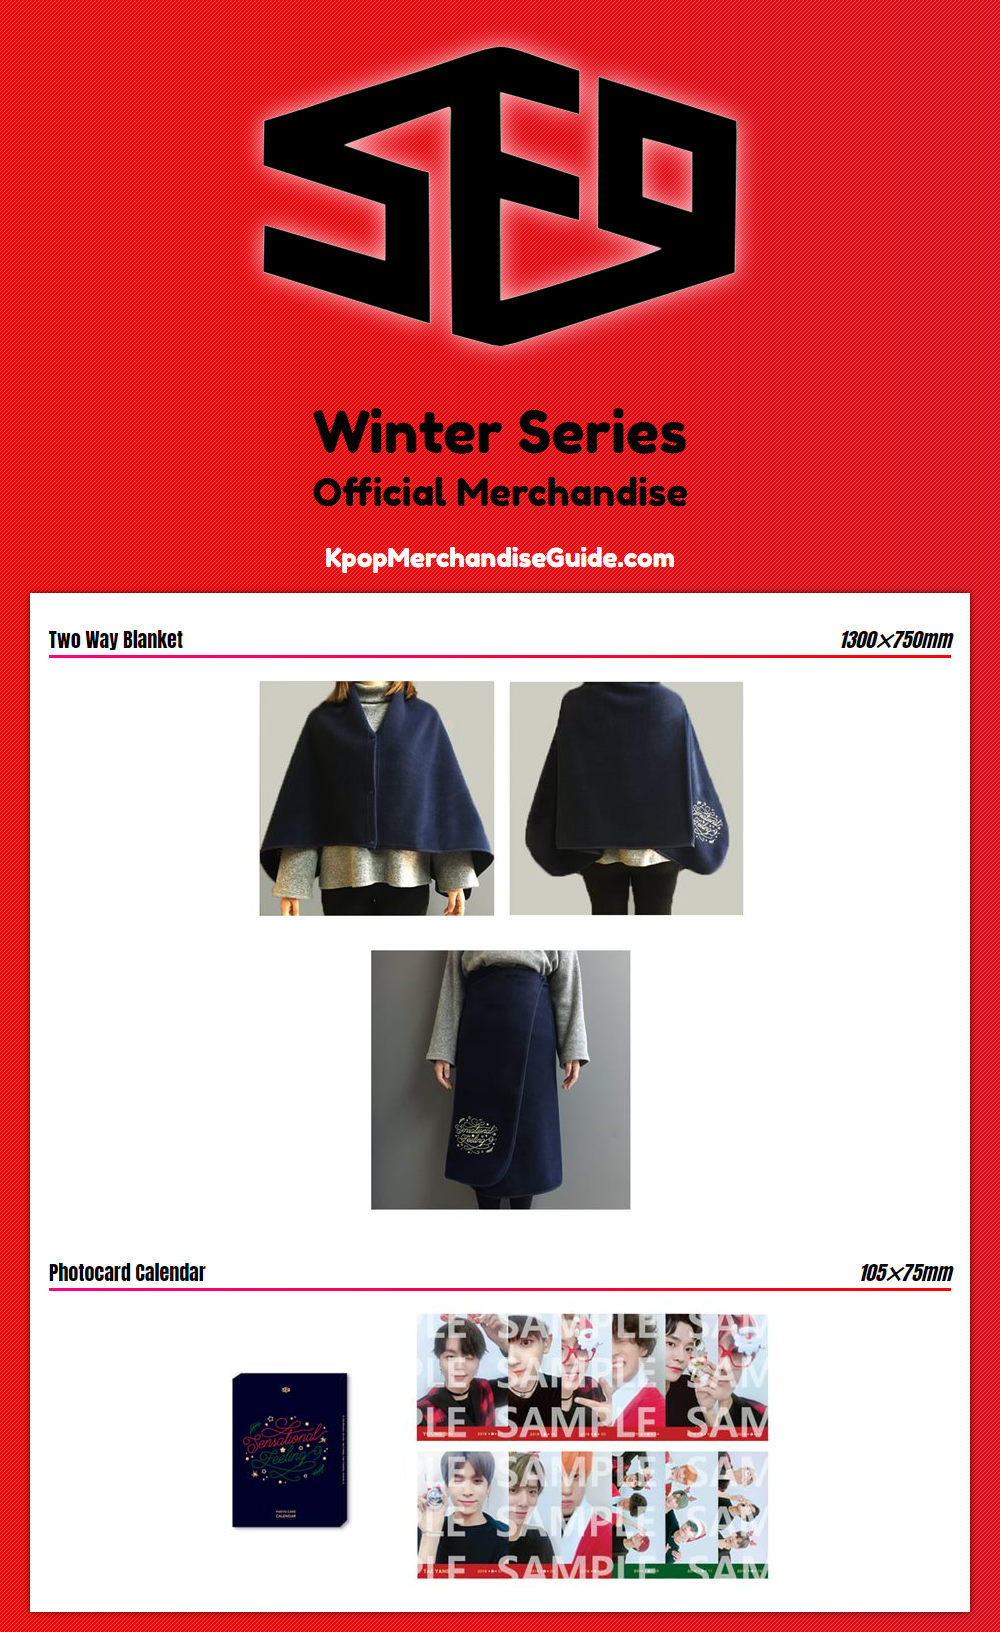 Winter Series official merchandise